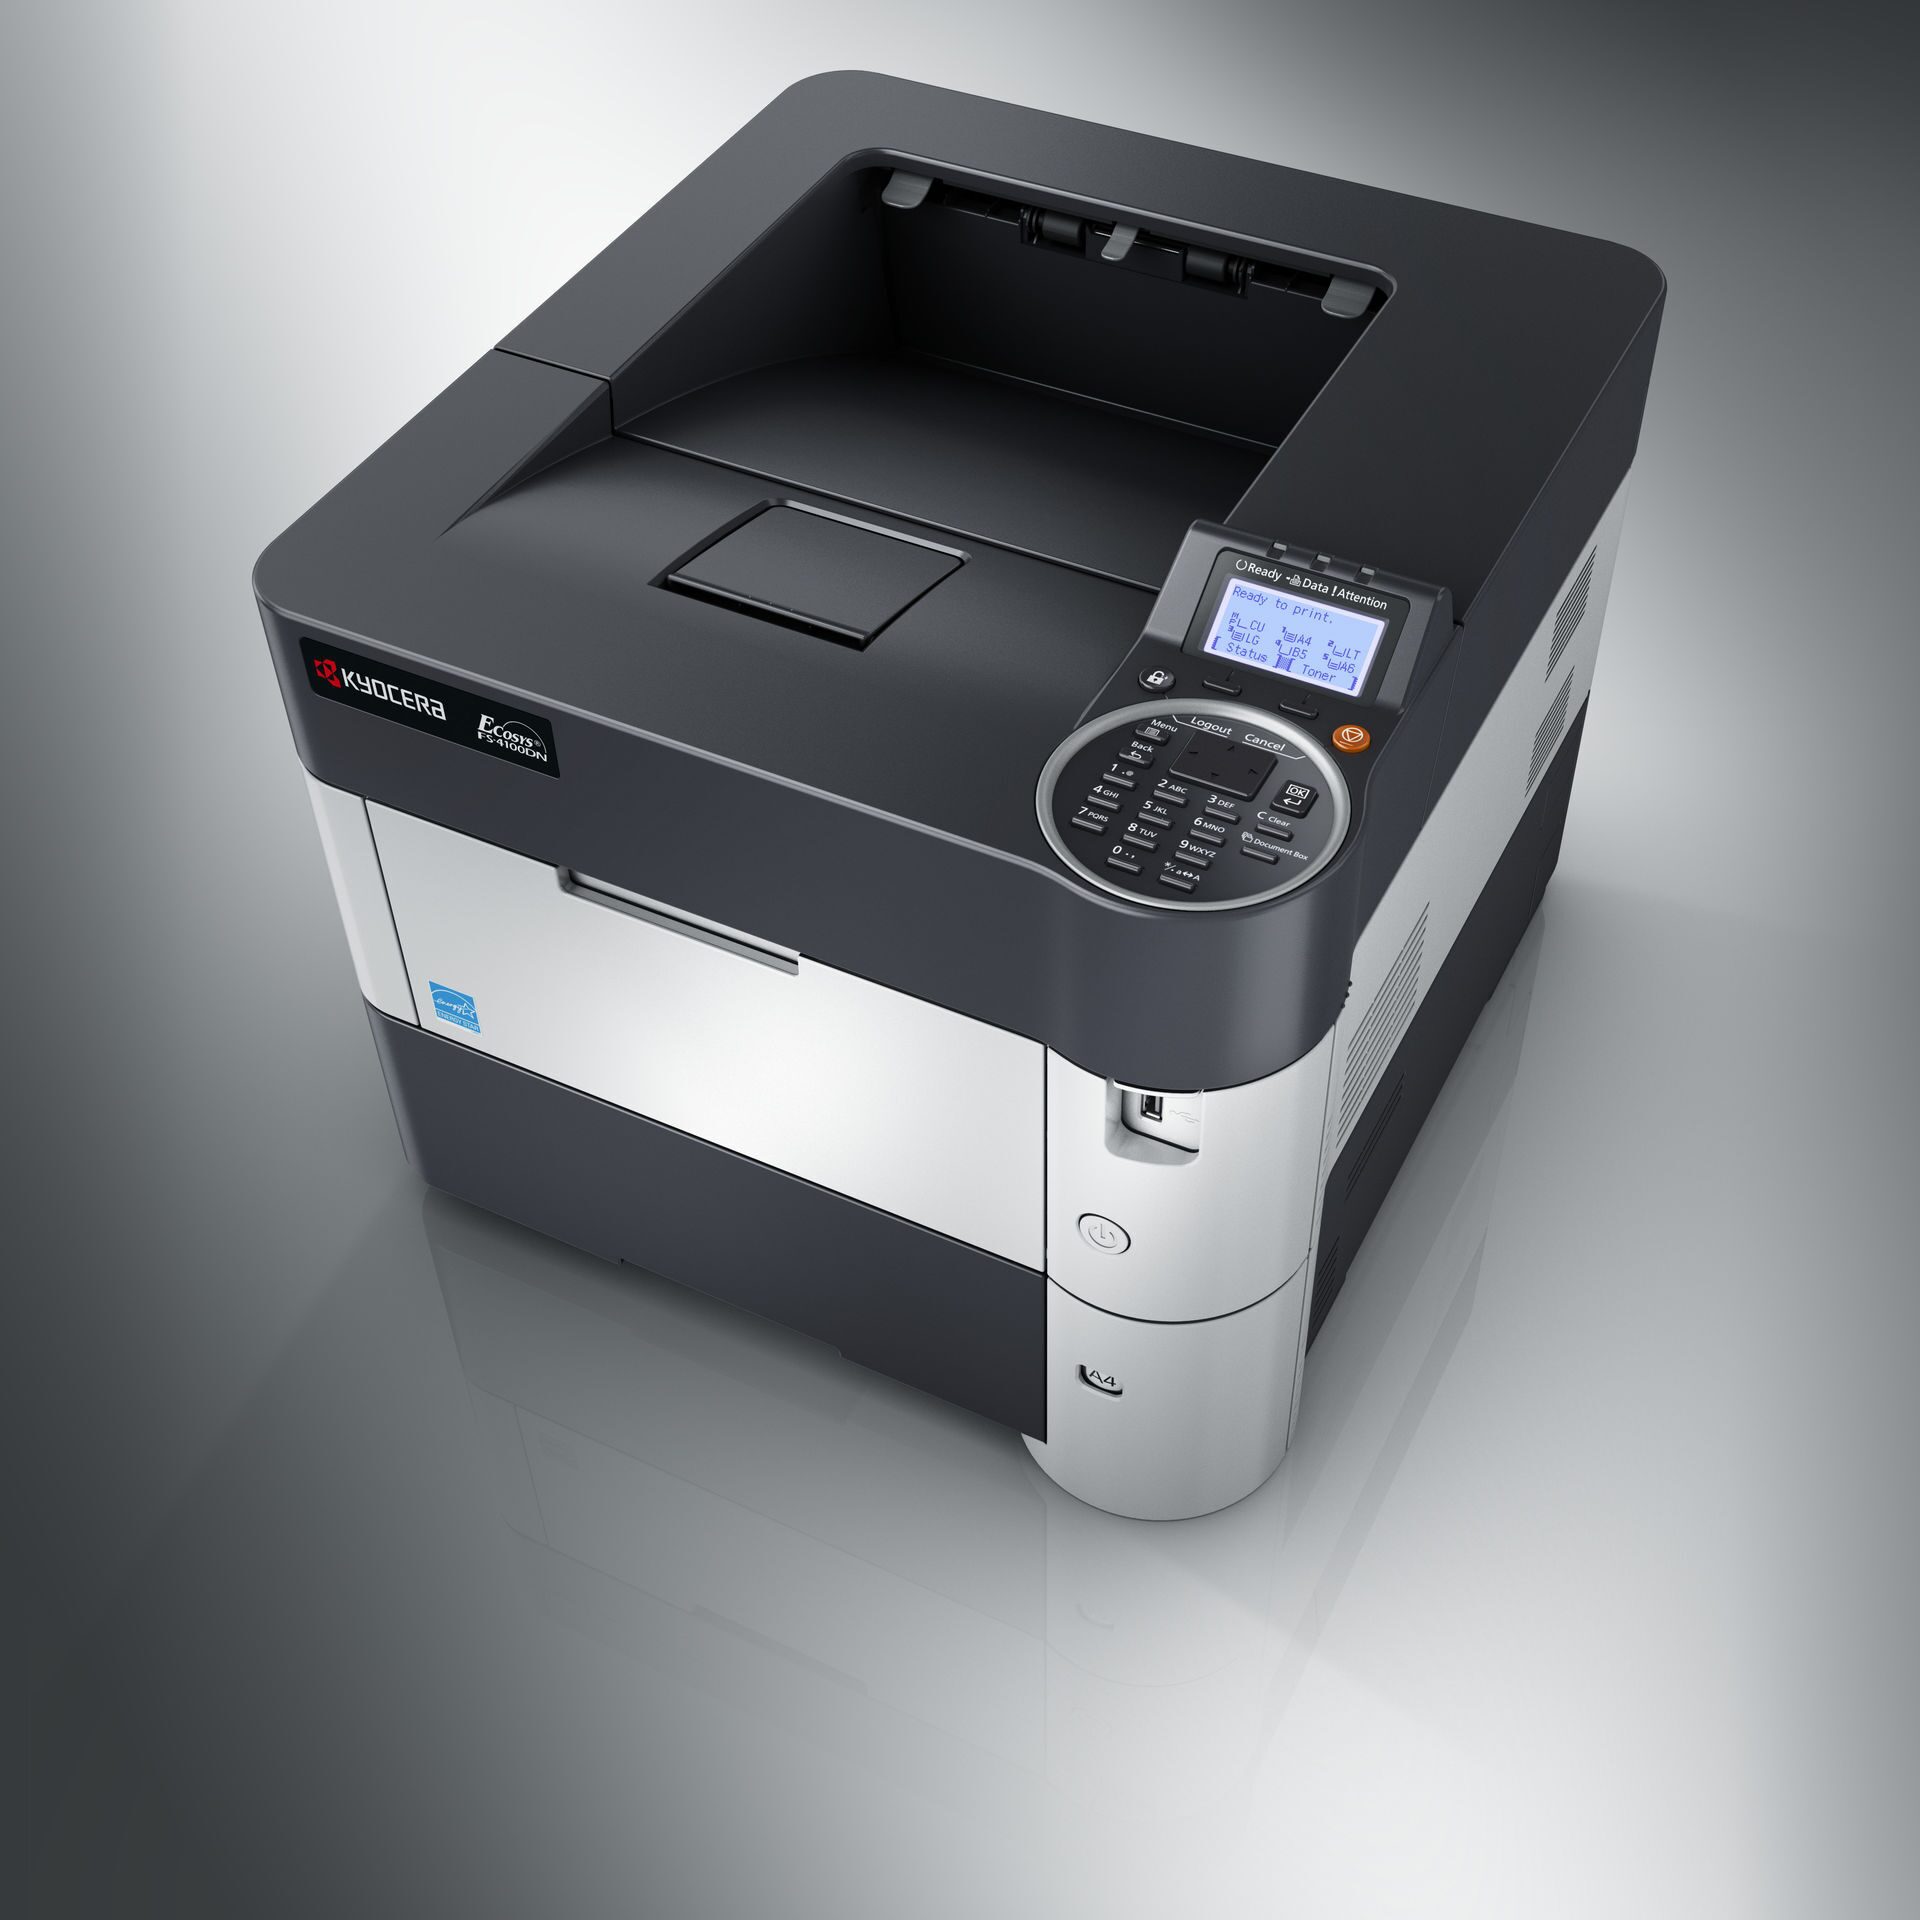 Принтер Kyocera FS-4300dn. Принтер Kyocera FS-4100dn. Принтер Kyocera FS-4200dn. FS 4200dn принтер.